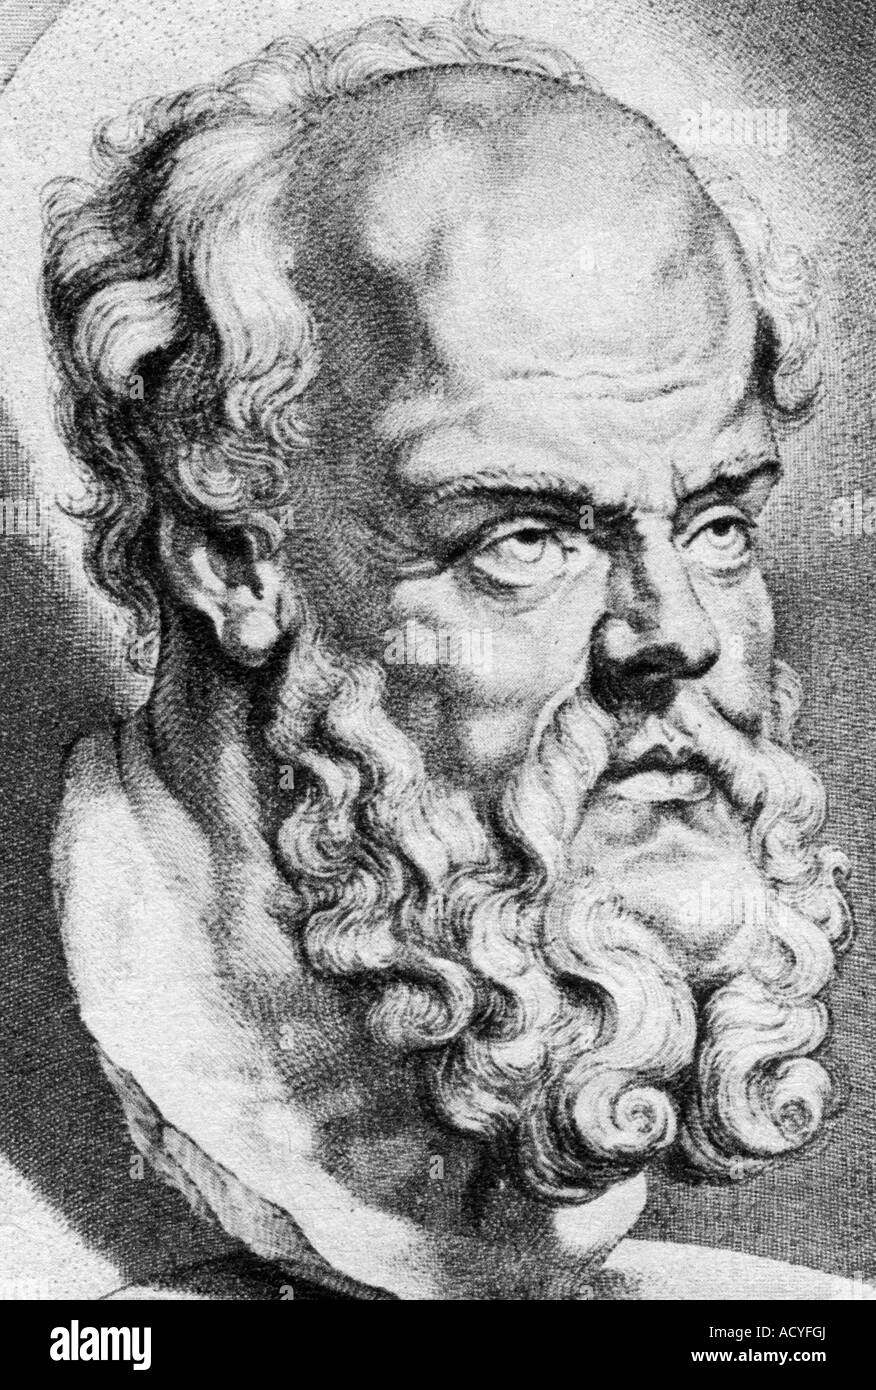 Socrates Drinking Hemlock by Paul Noth